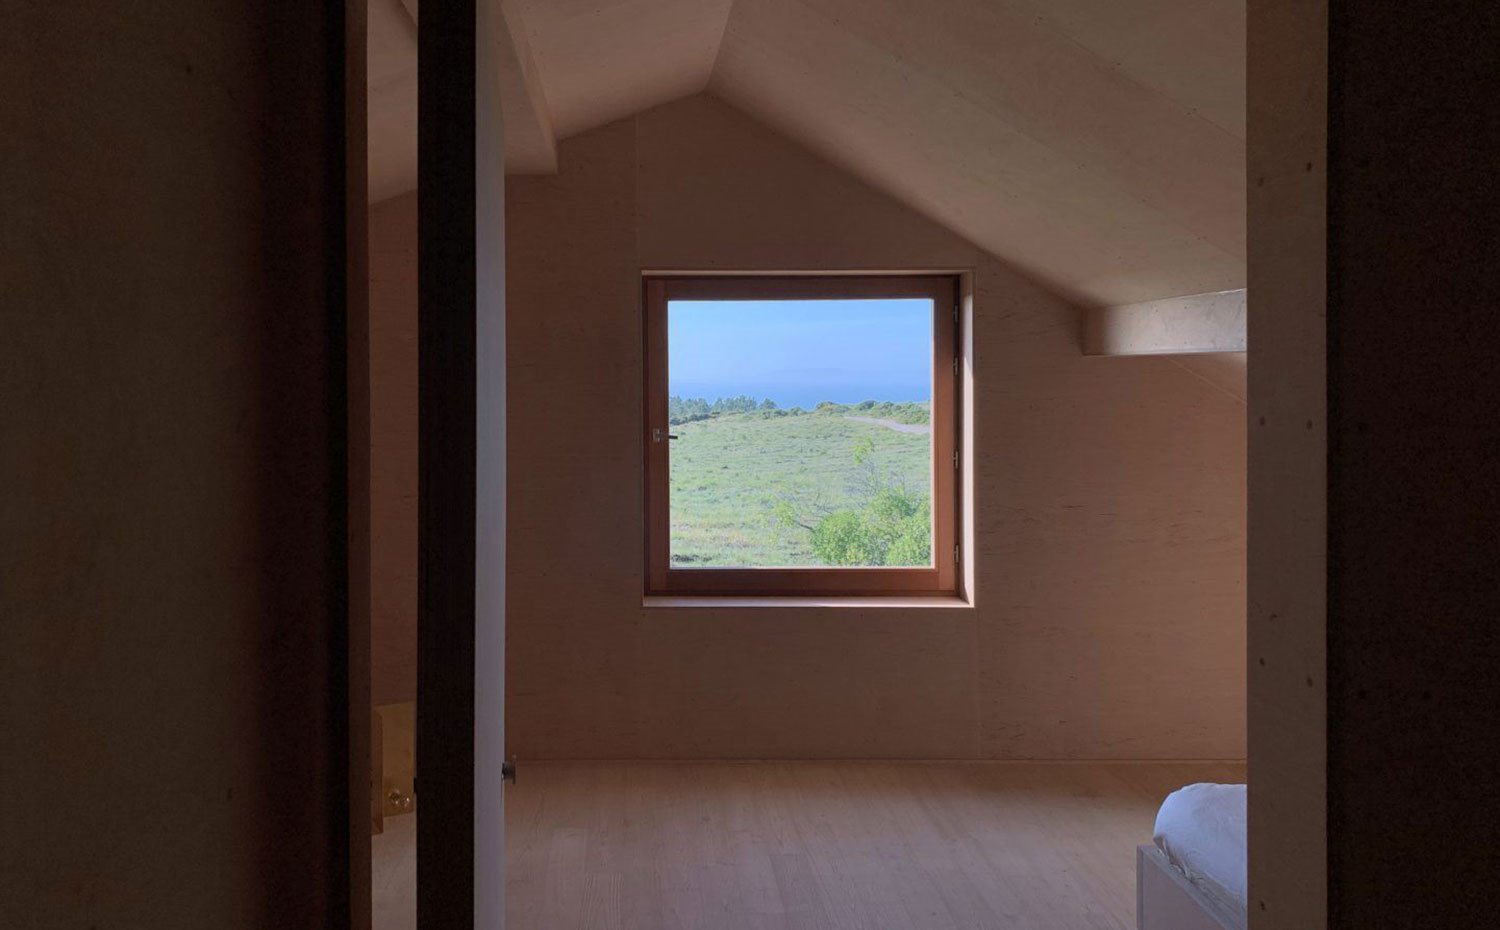 Detalle dormitorio con techo inclinado a dos aguas y ventana cuadrada a paisaje exterior, todo revestido de madera